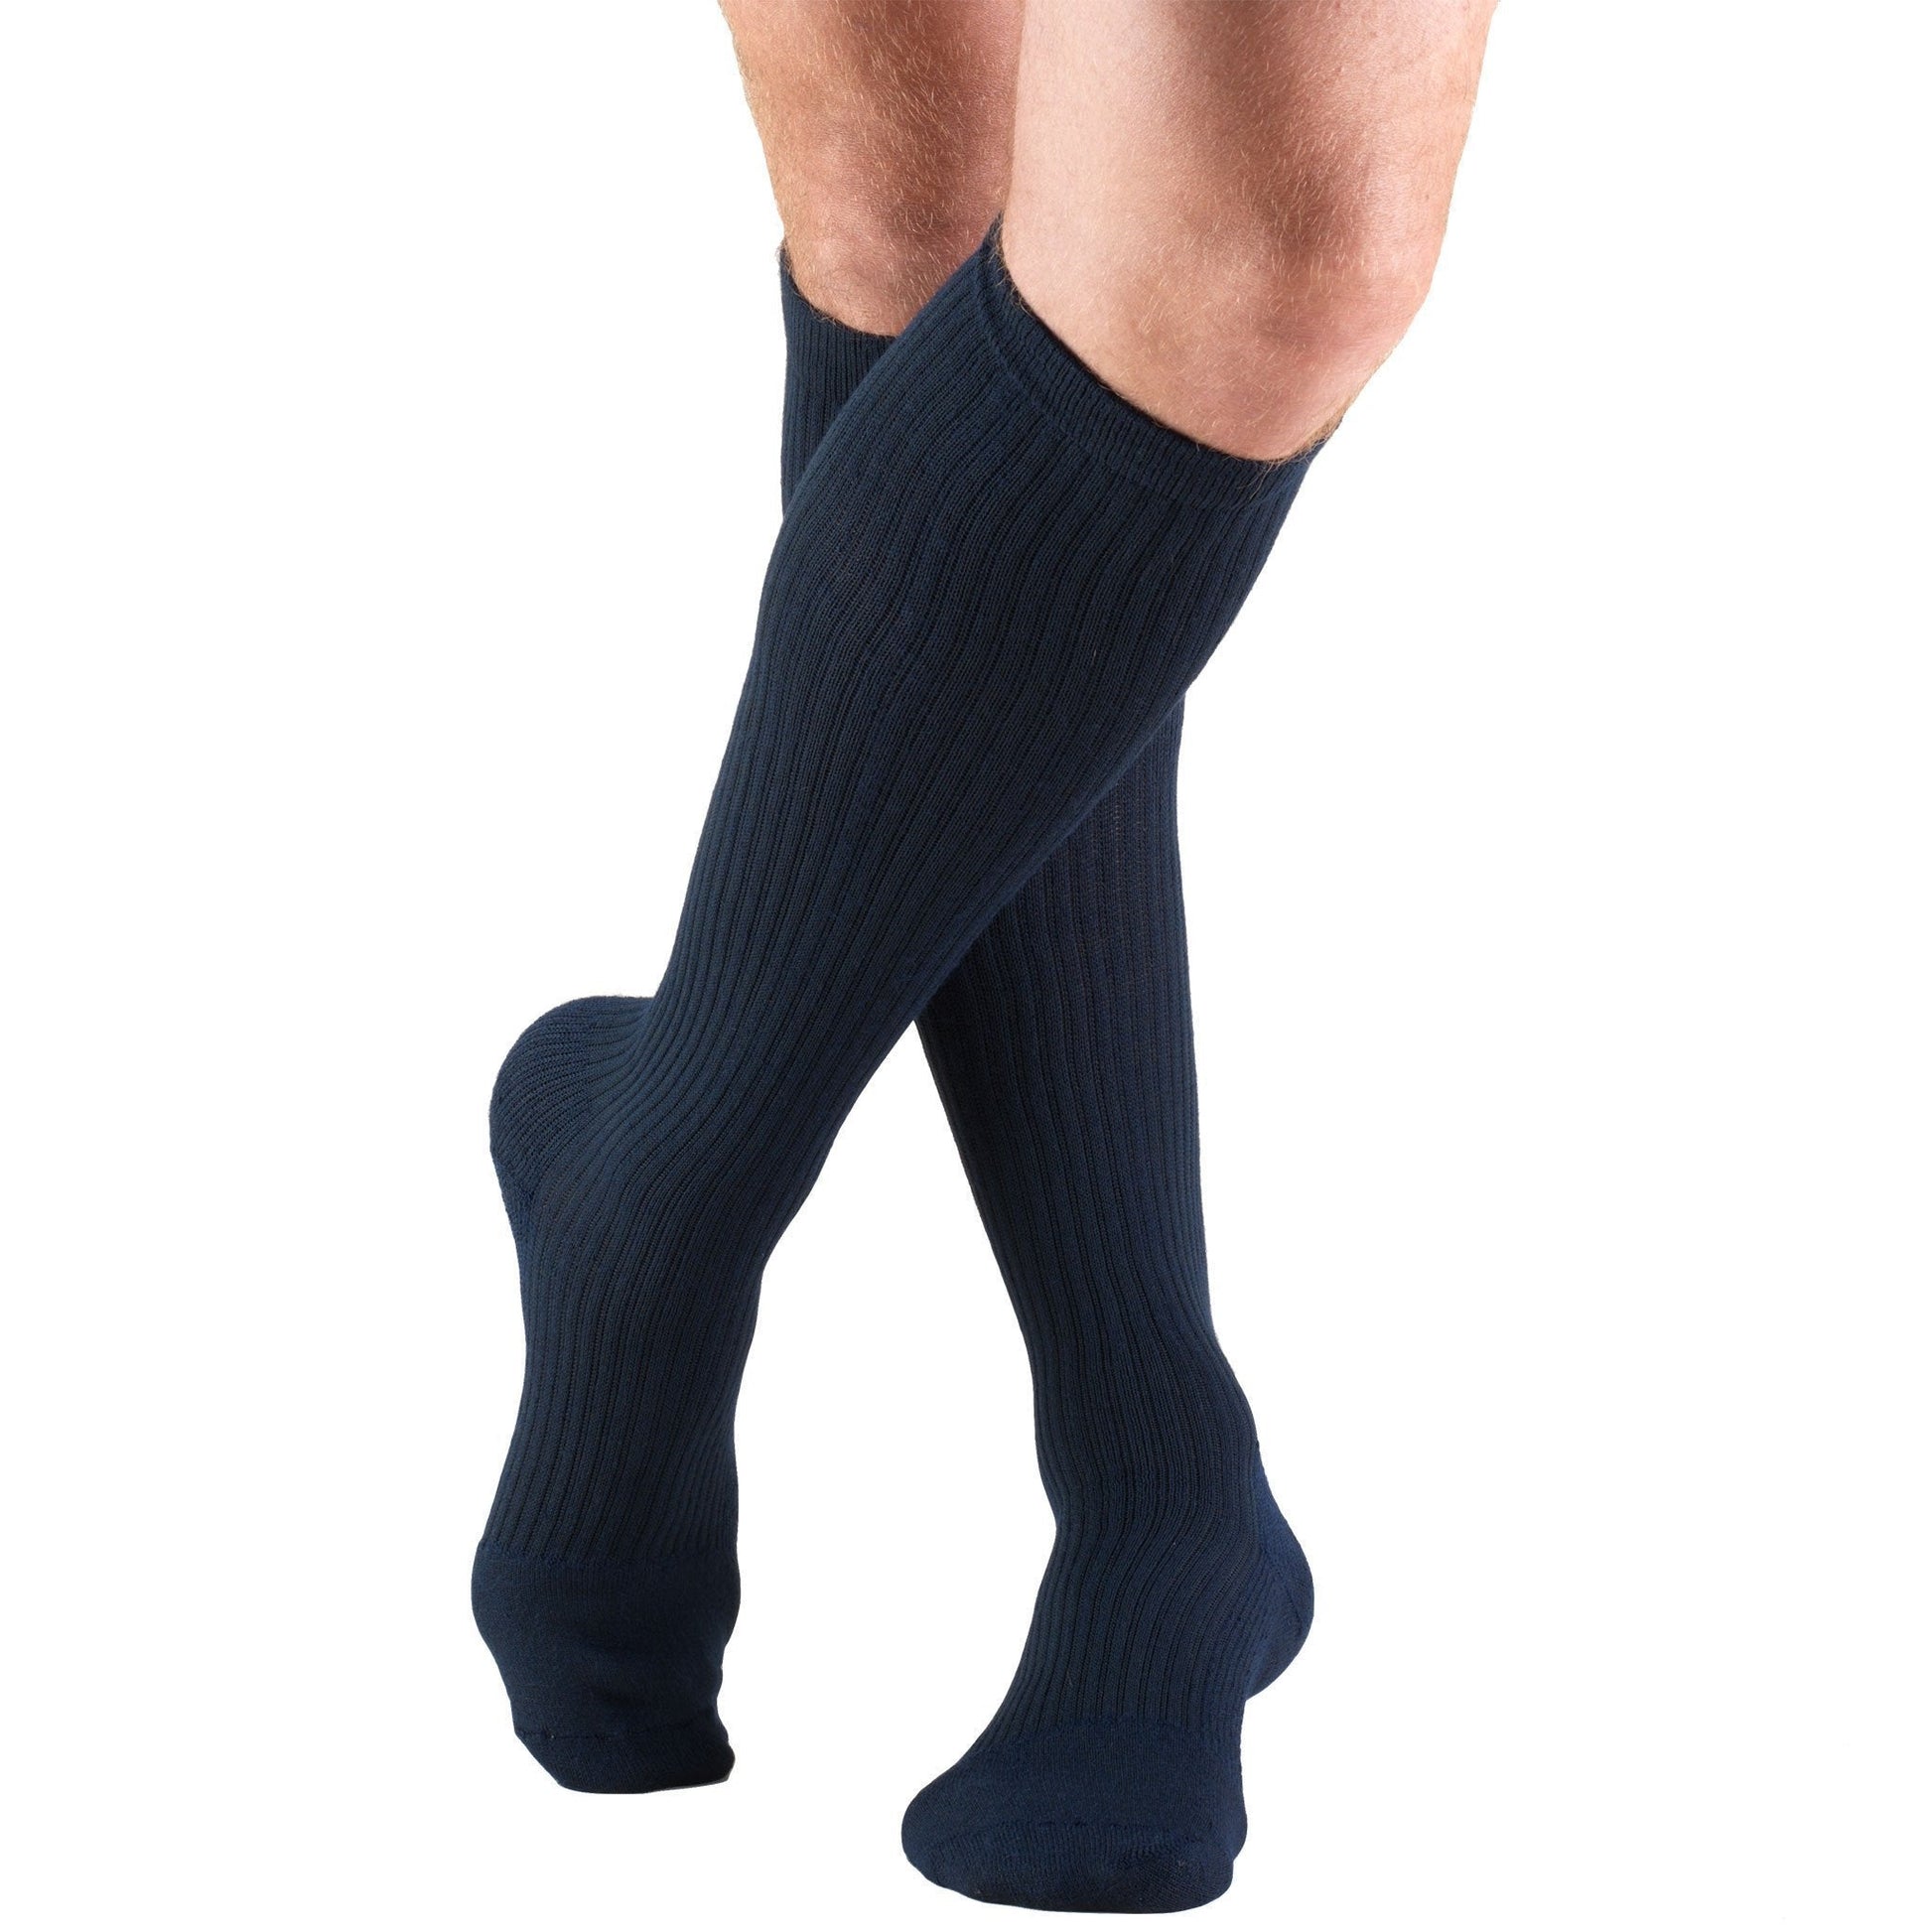 TRUFORM® Men's Cushion Foot Knee High 15-20 mmHg – Compression Stockings